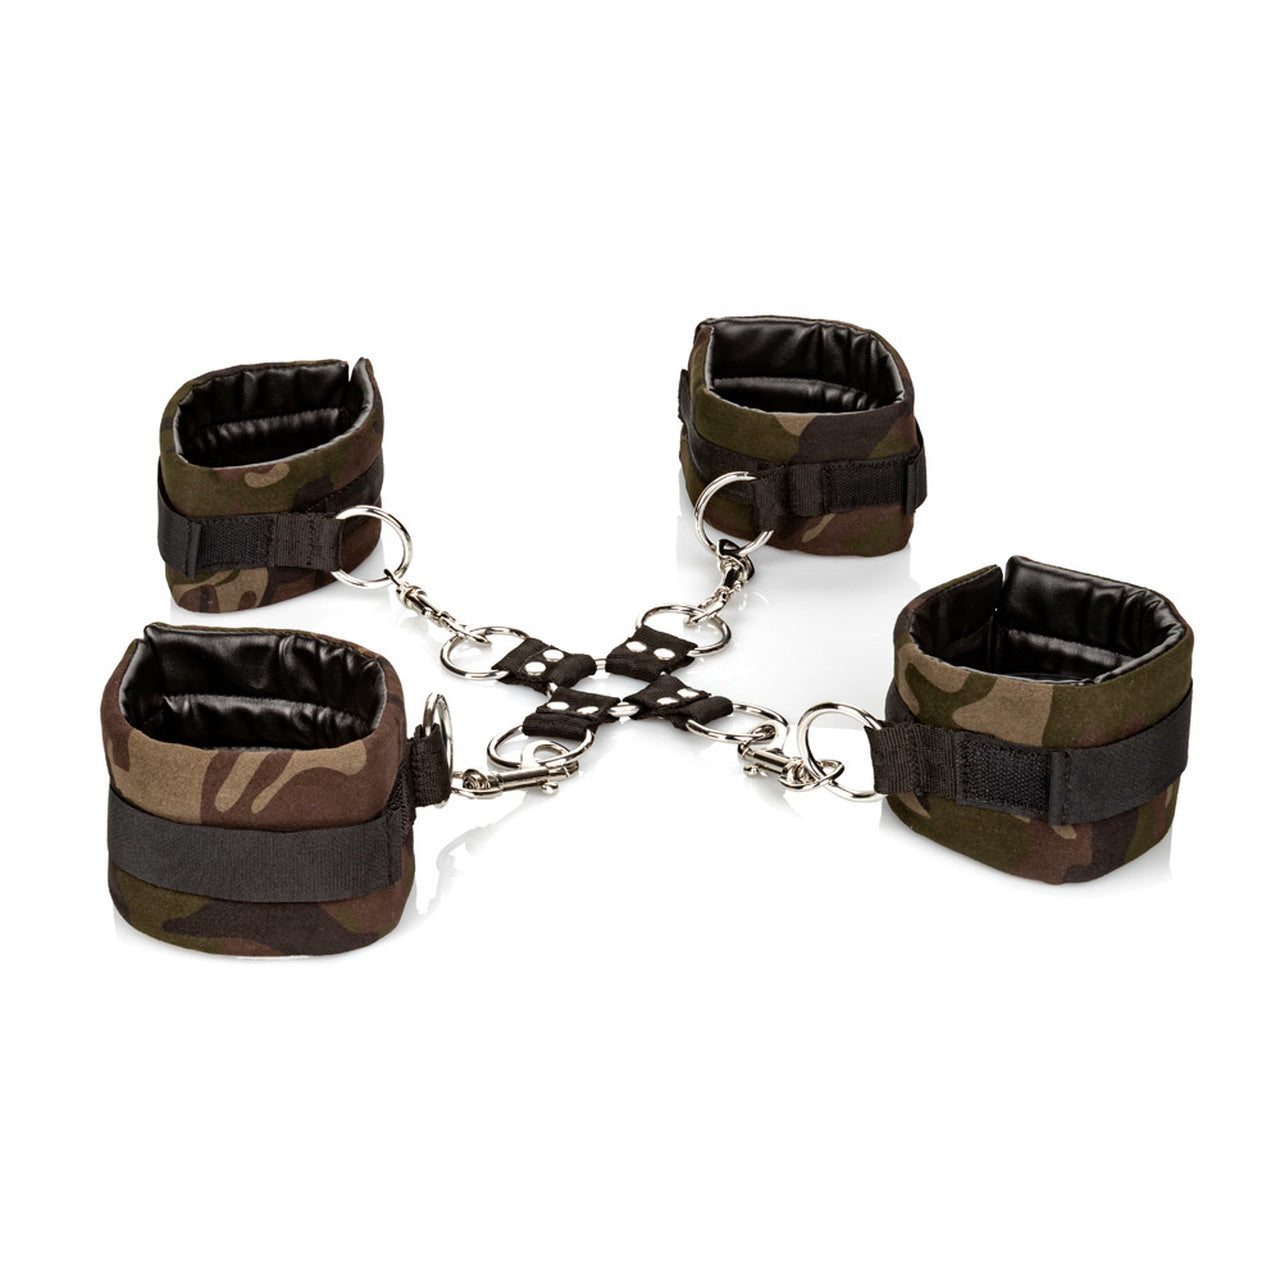 Colt Camo Hog Tie Restraint with Four Universal Adjustable Cuffs